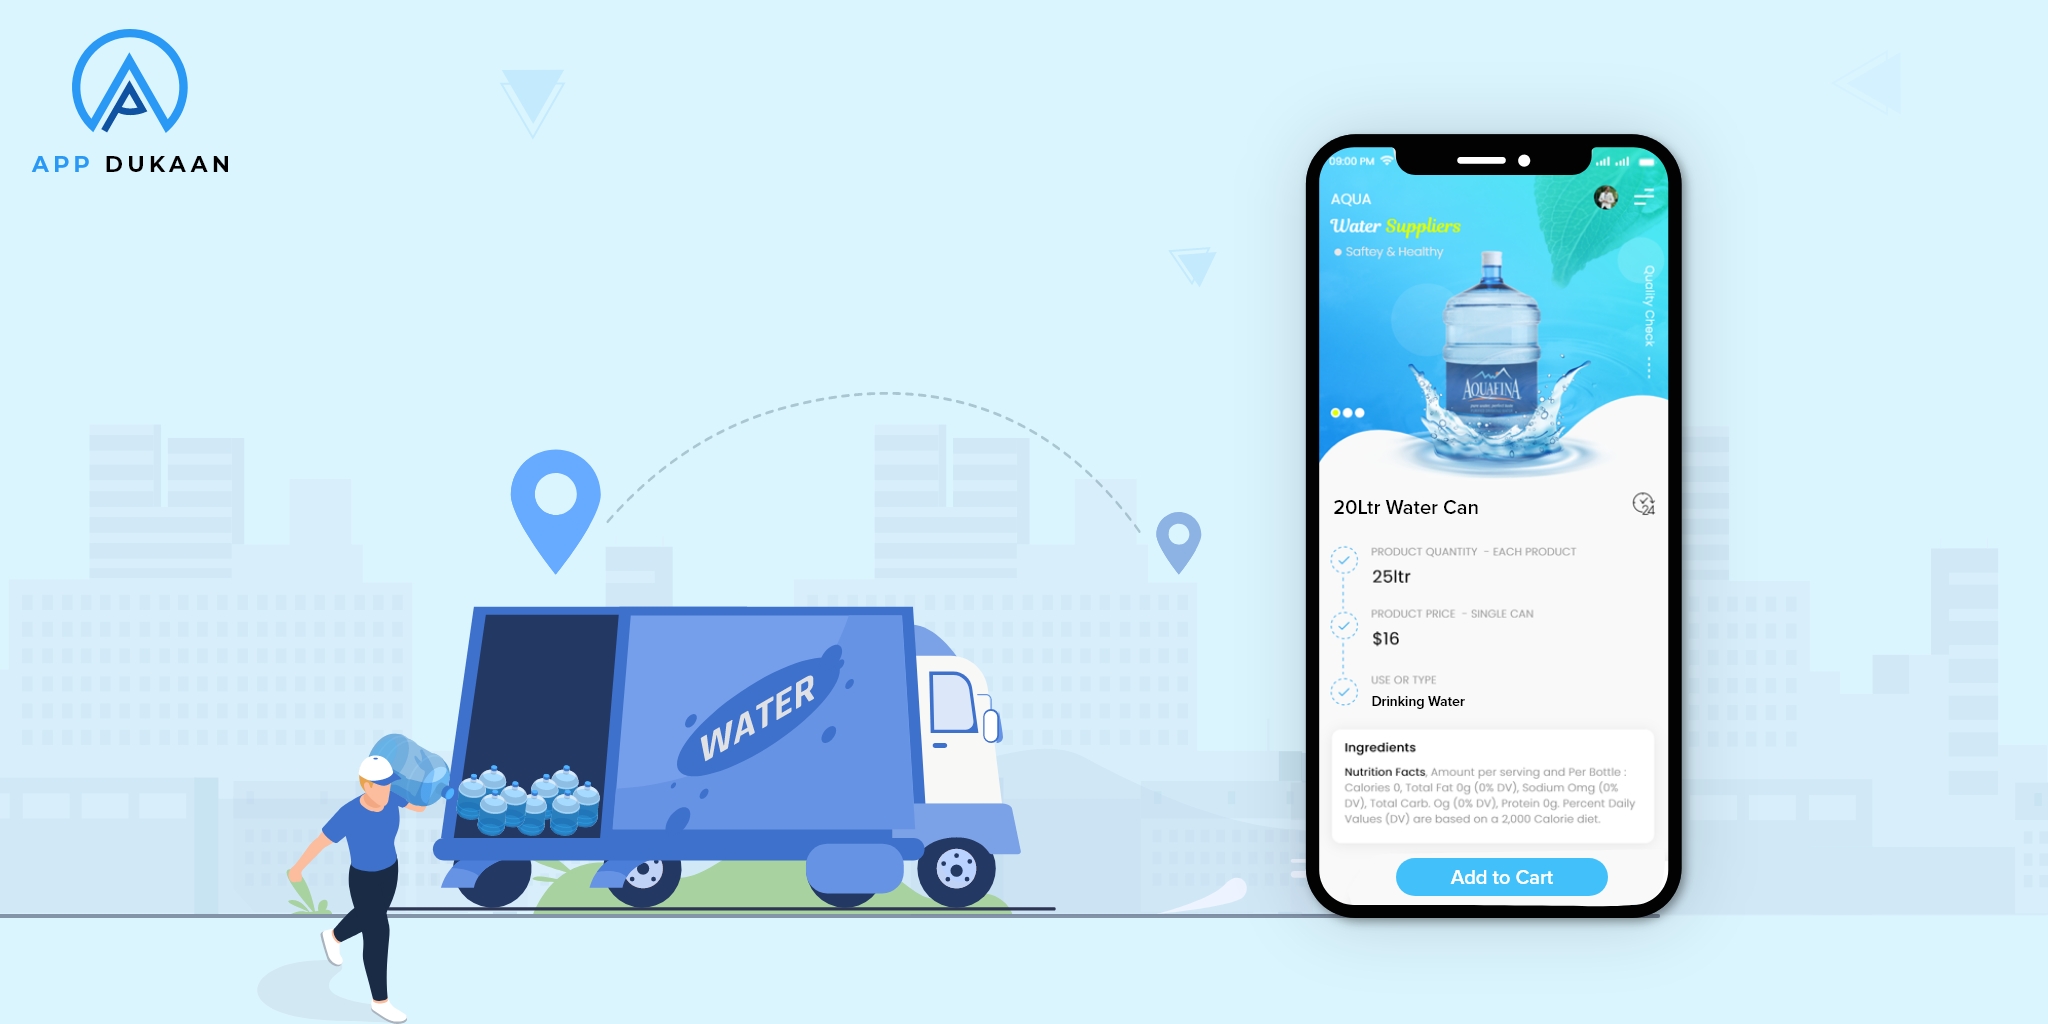 water delivery app development